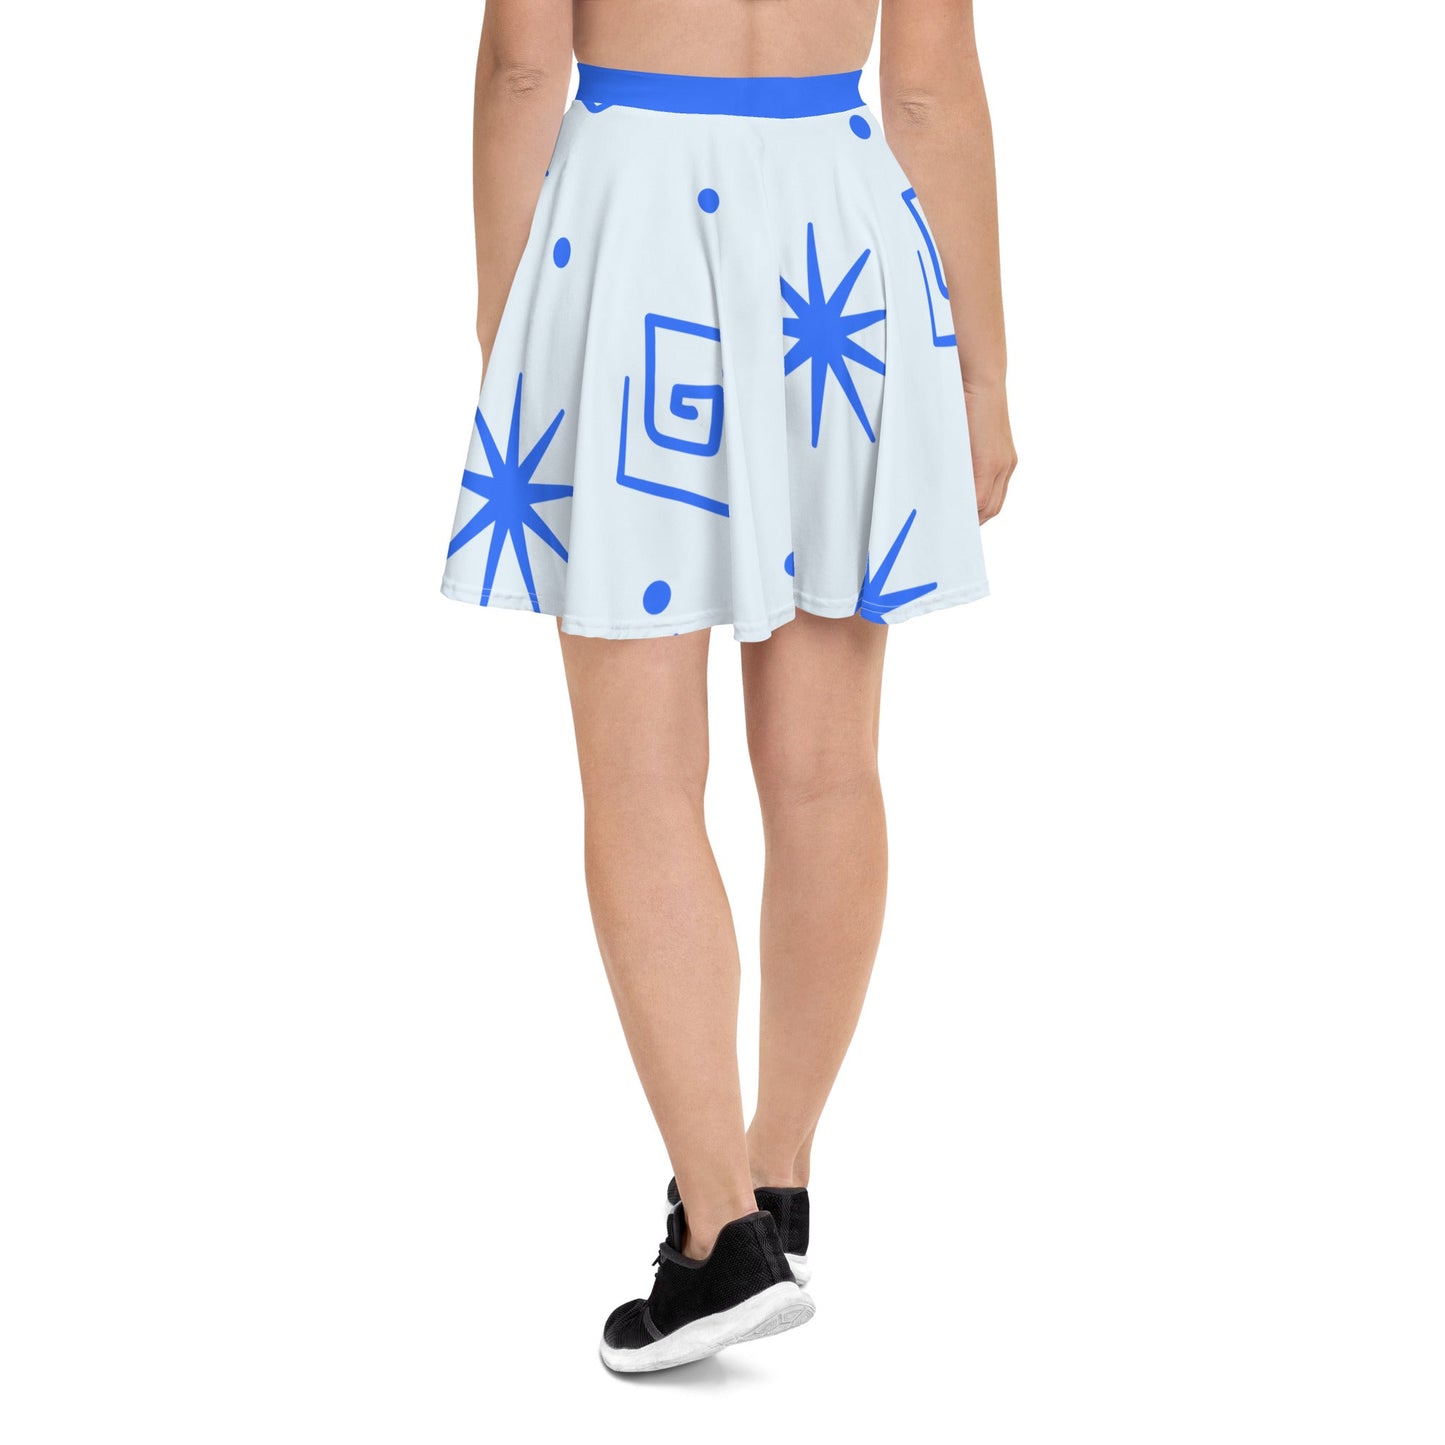 Teacups Blue Skater Skirt alice costumebachelorette stylesCoordinating trip#tag4##tag5##tag6#